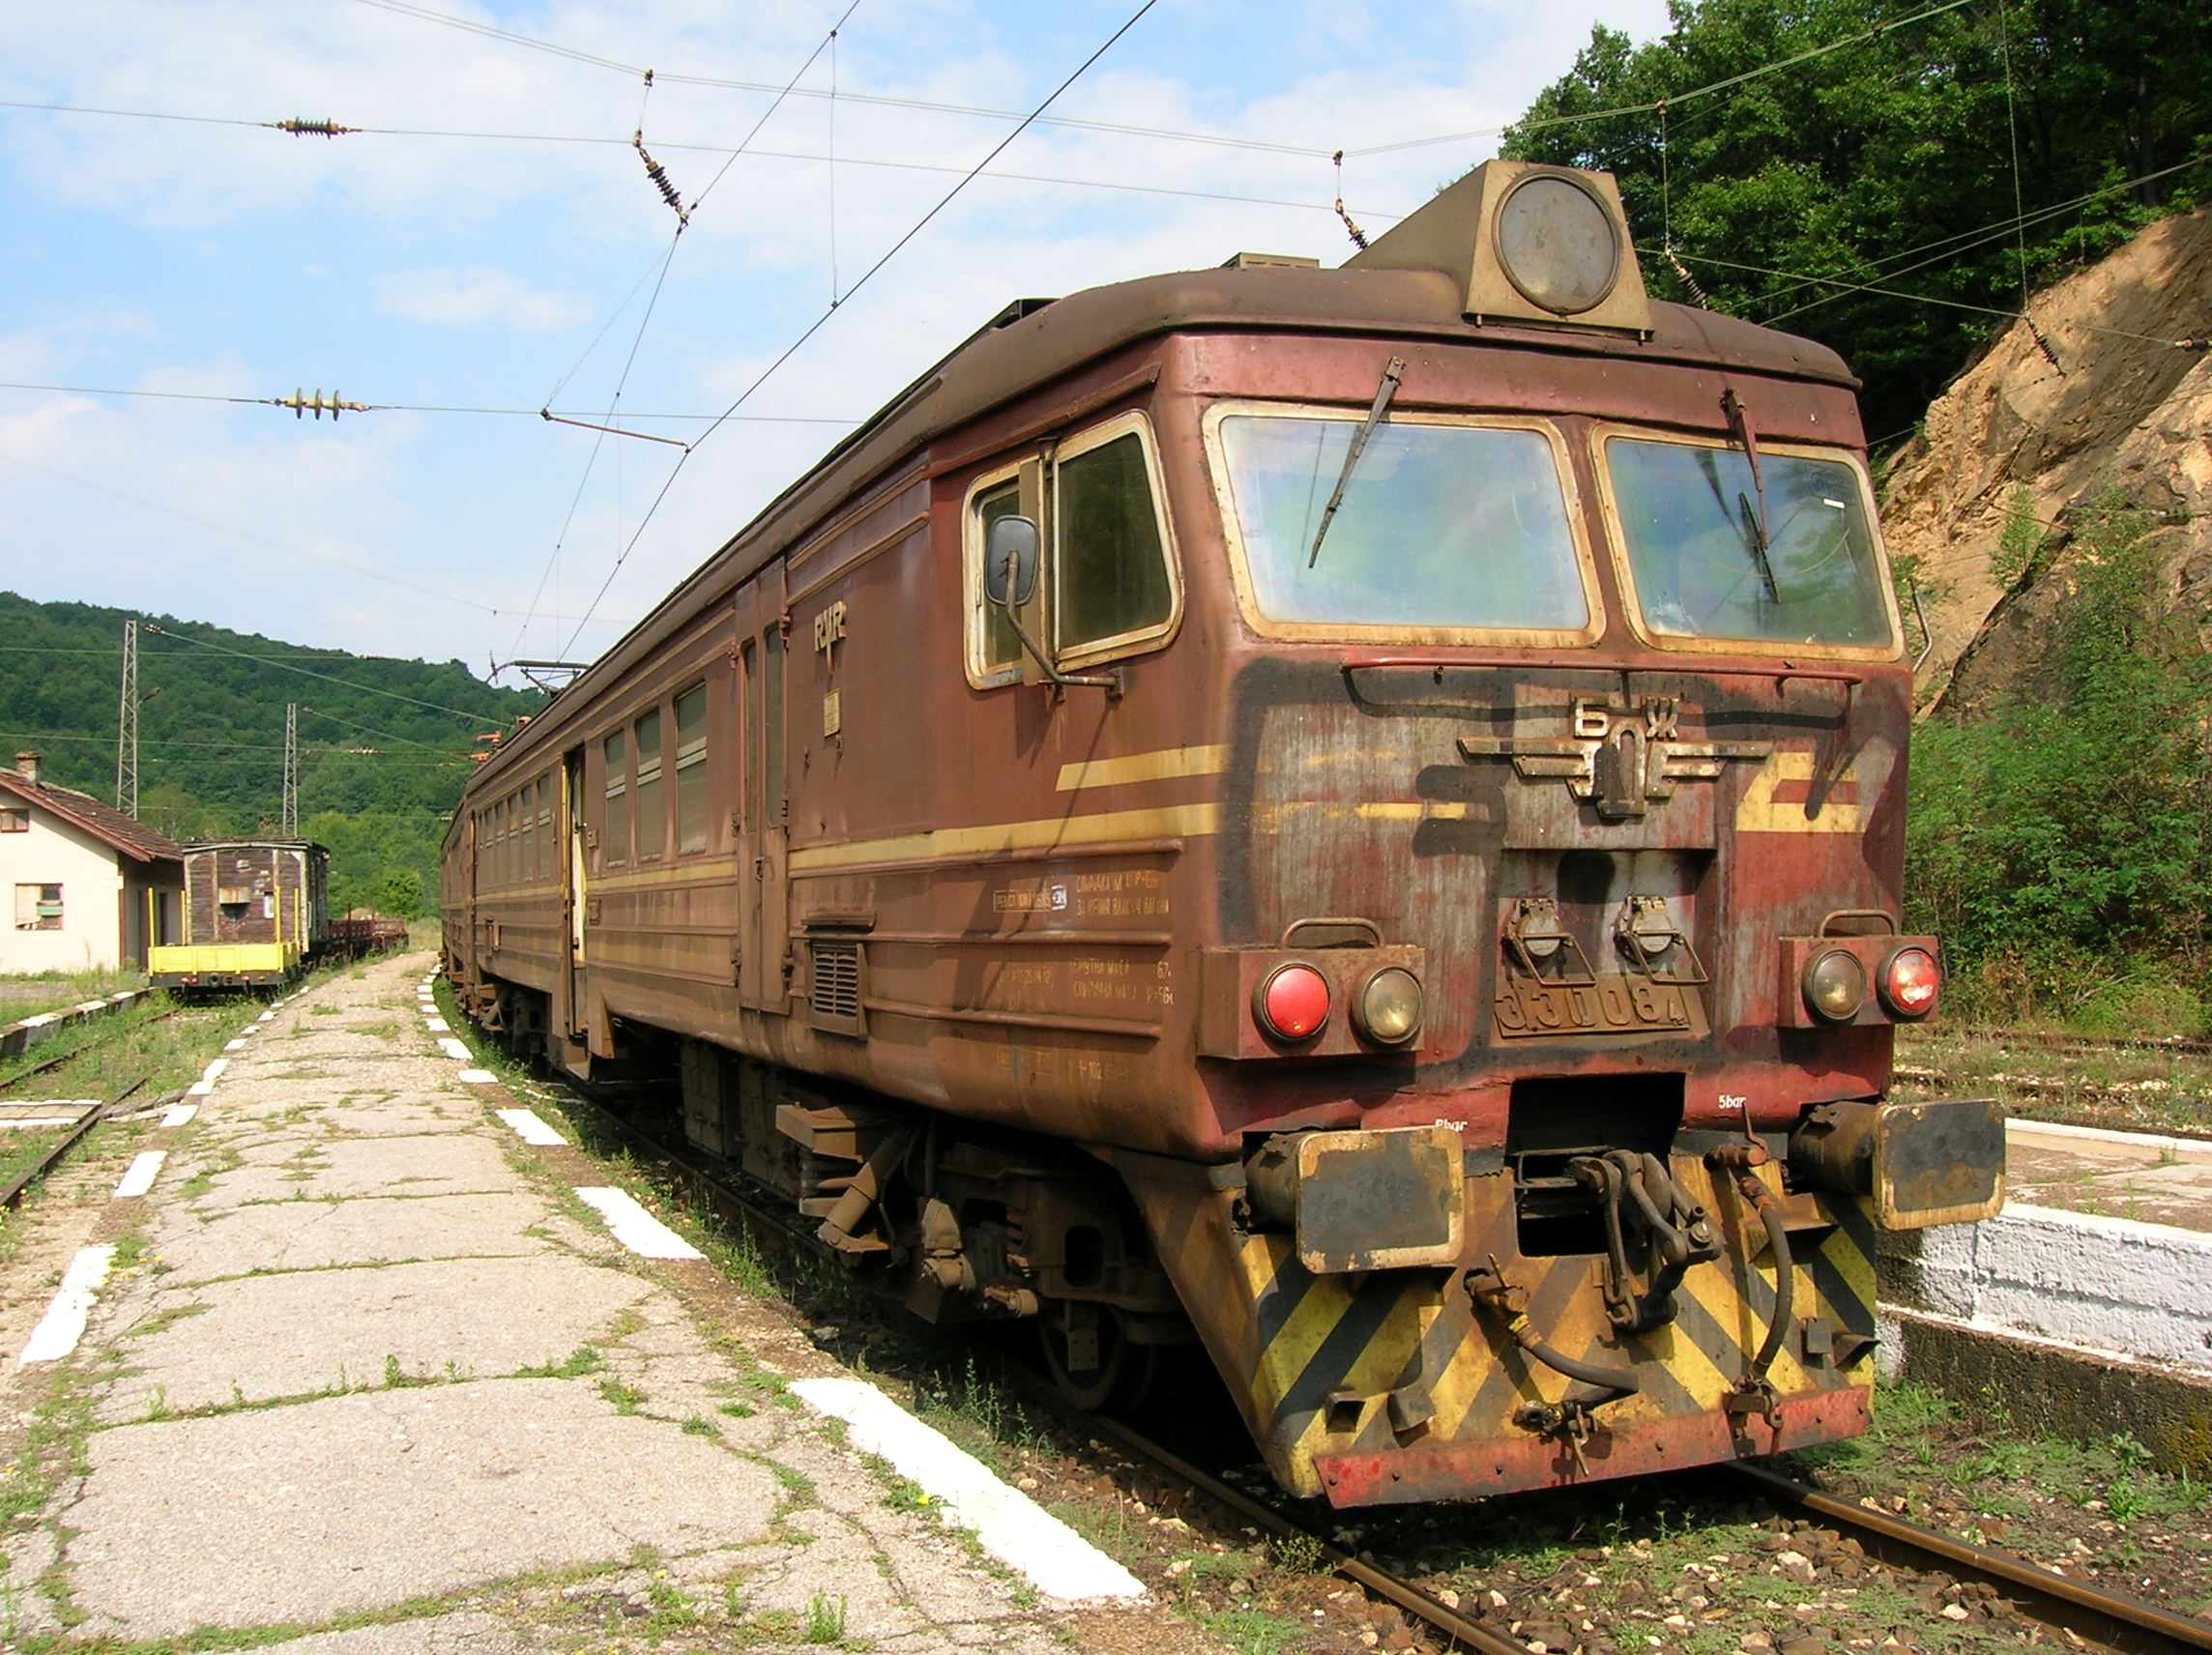 File:Rusty train in Koprivshtitsa.JPG - Wikimedia Commons